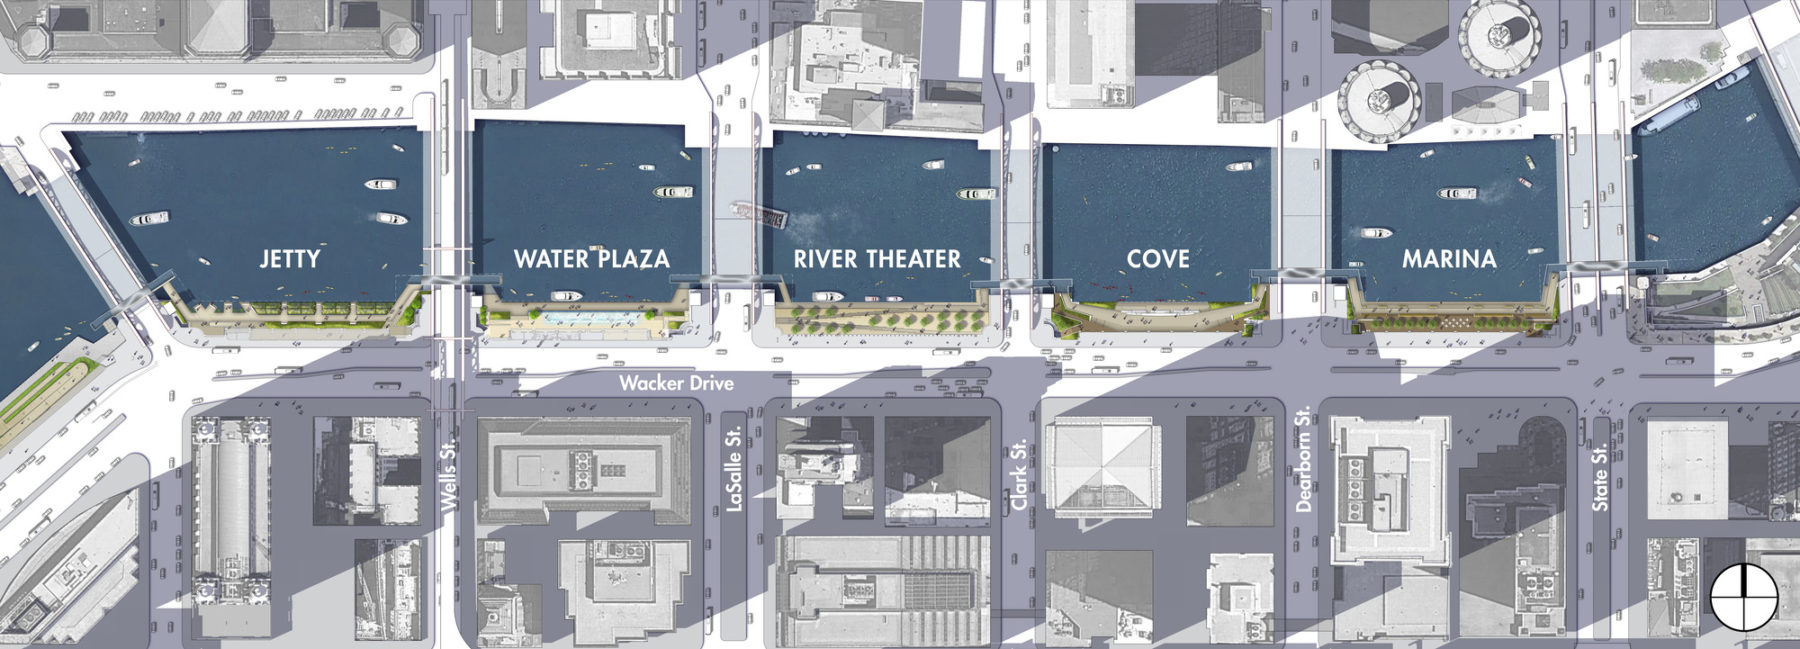 illustrative plan of riverwalk